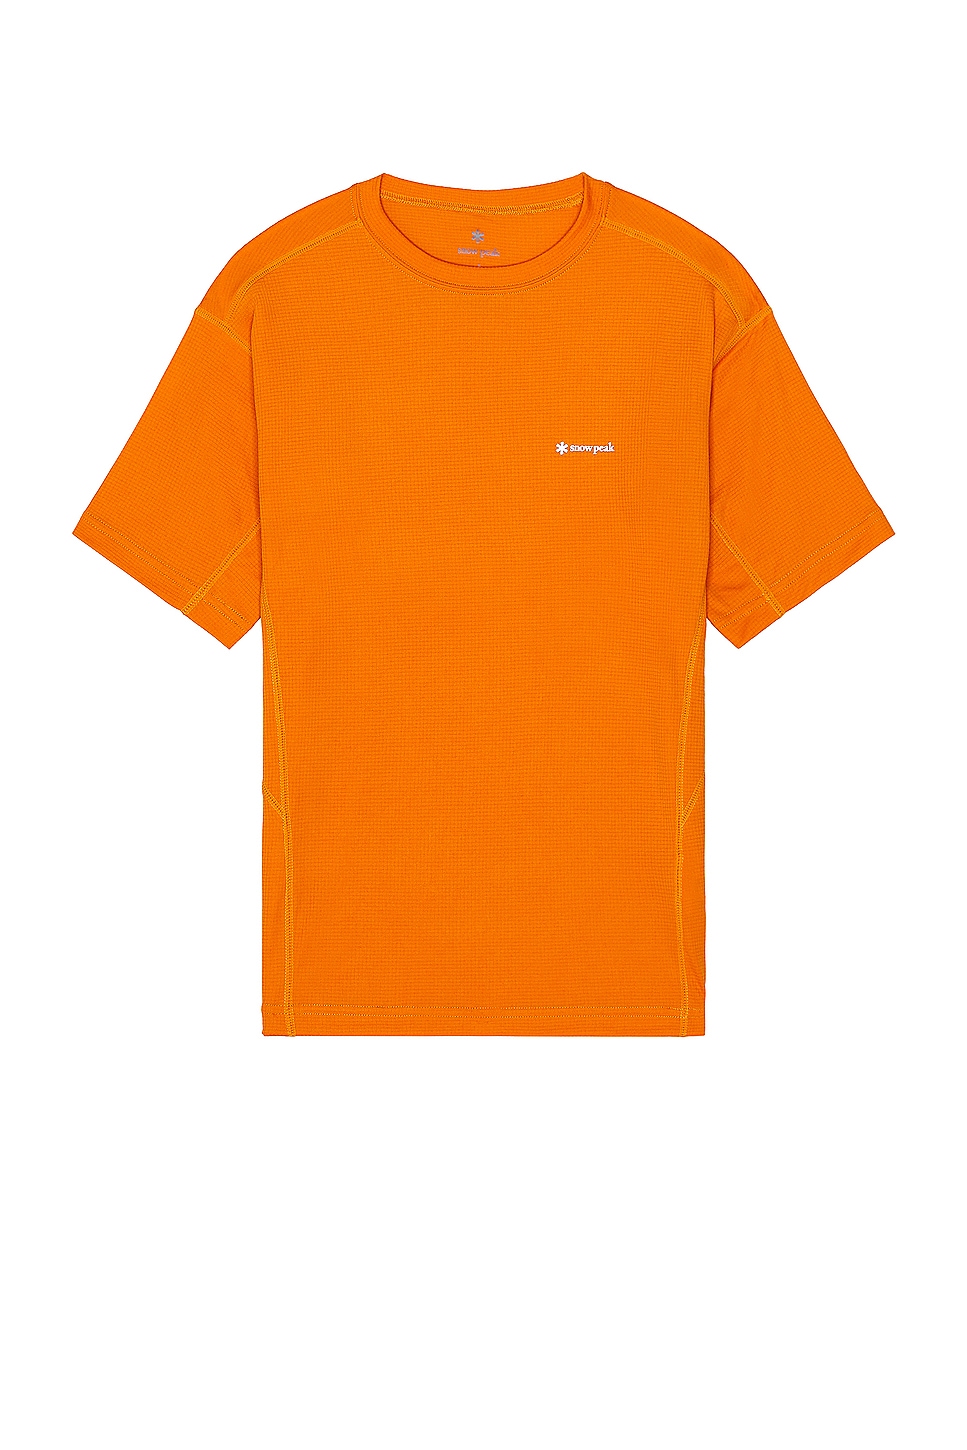 Image 1 of Snow Peak Pe Power Dry Short Sleeve T-Shirt in Orange